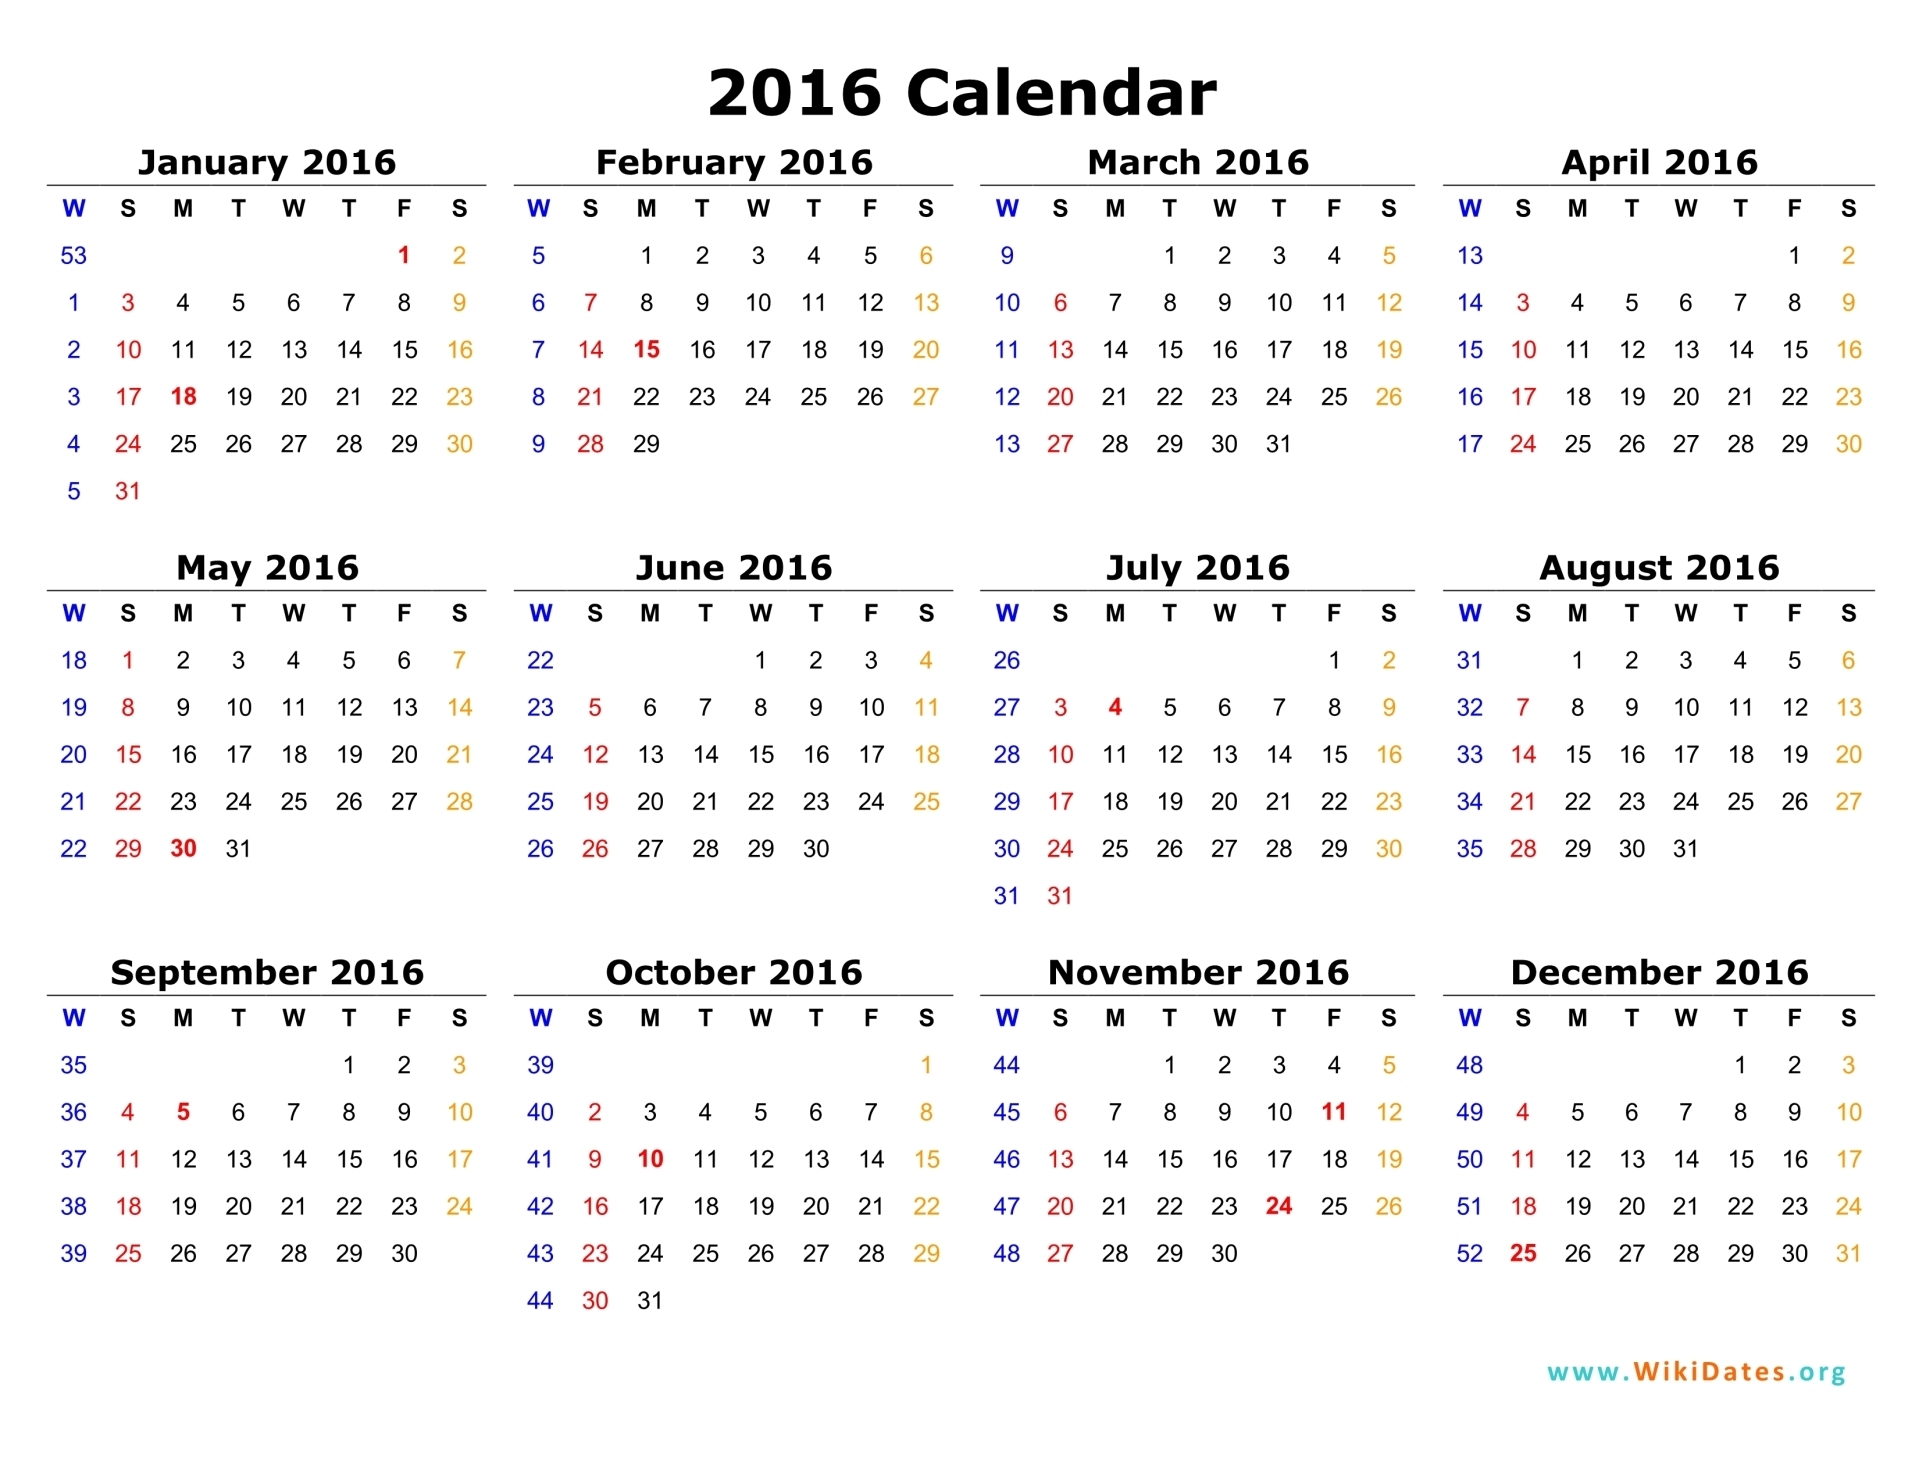 2016 Calendar WikiDates org